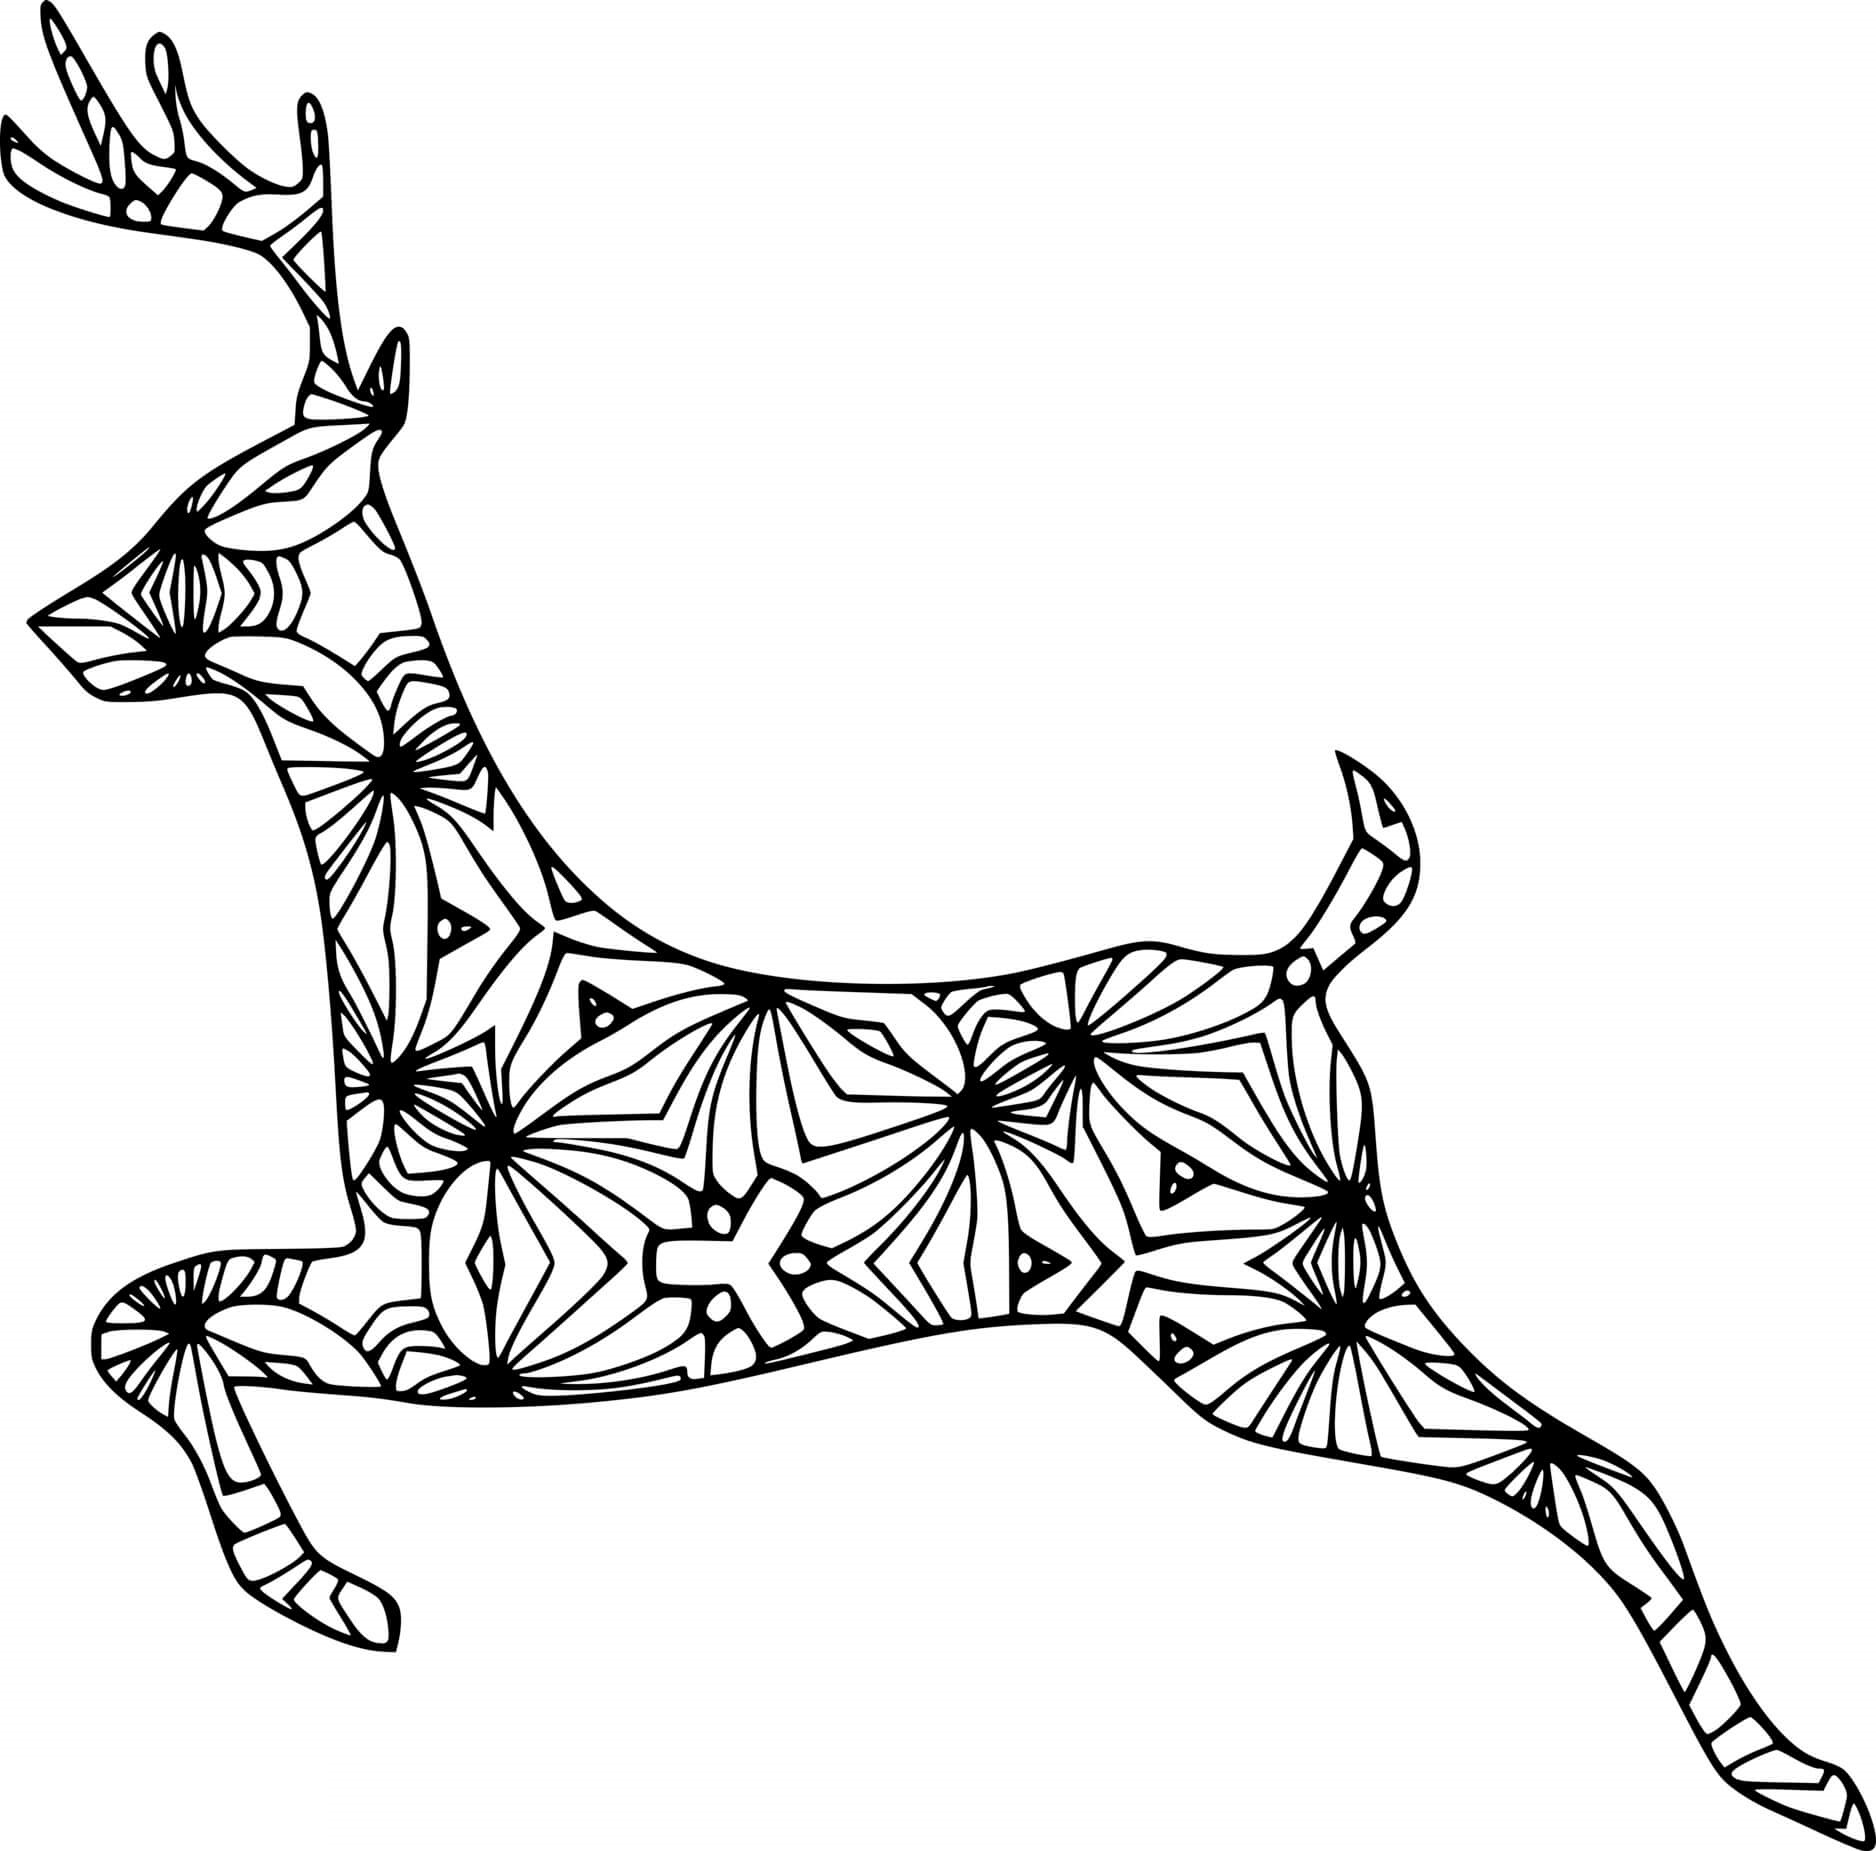 Running Deer Art Coloring Page